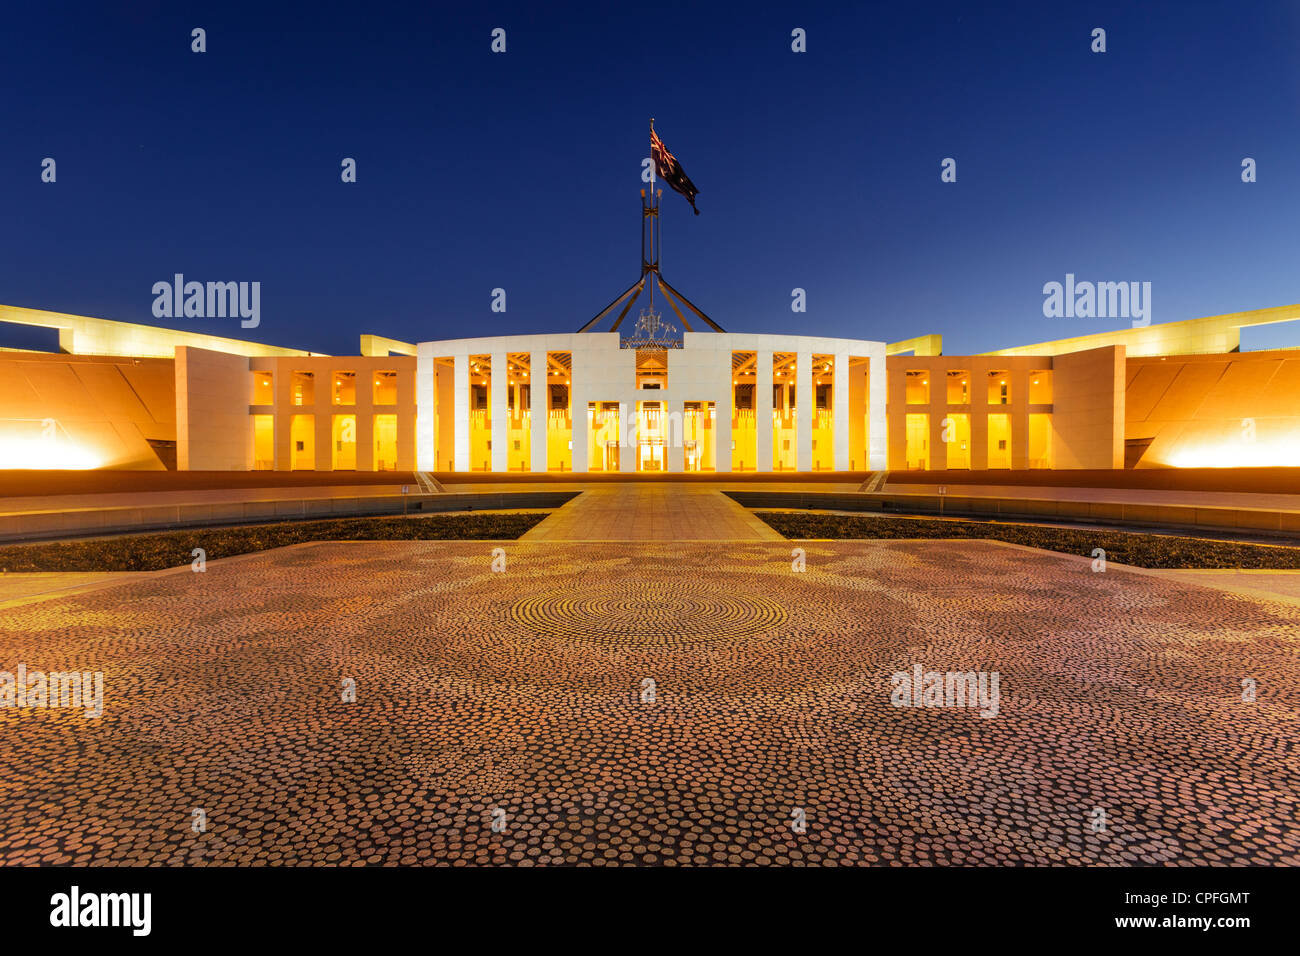 Parliament House, Canberra, Australia, illuminated at twilight. Aboriginal mosaic in foreground, Australian flag is flying. Stock Photo